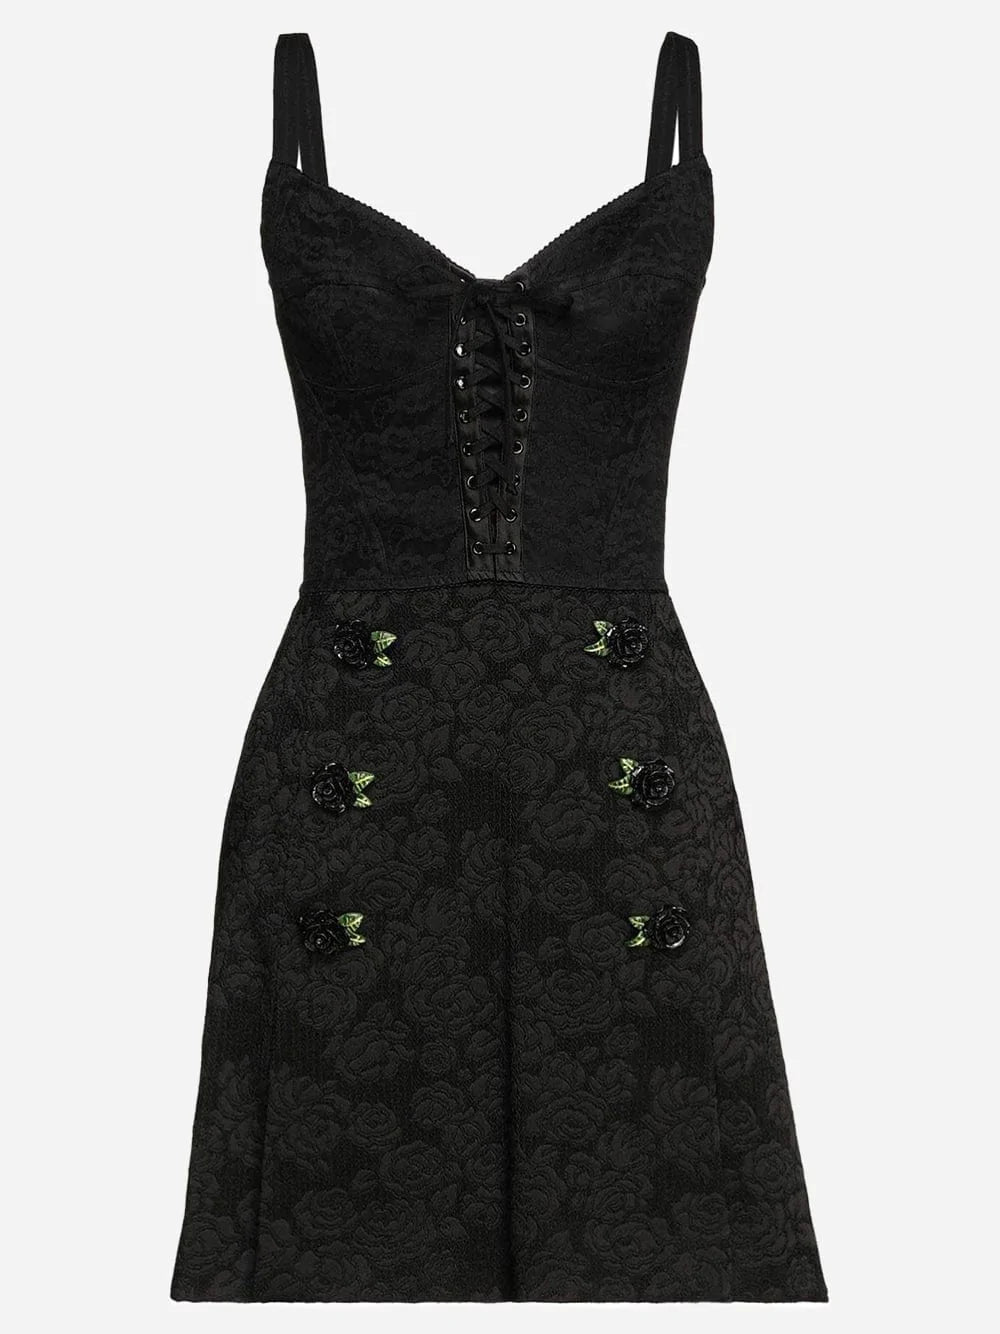 Dolce & Gabbana Jacquard Mini Dress